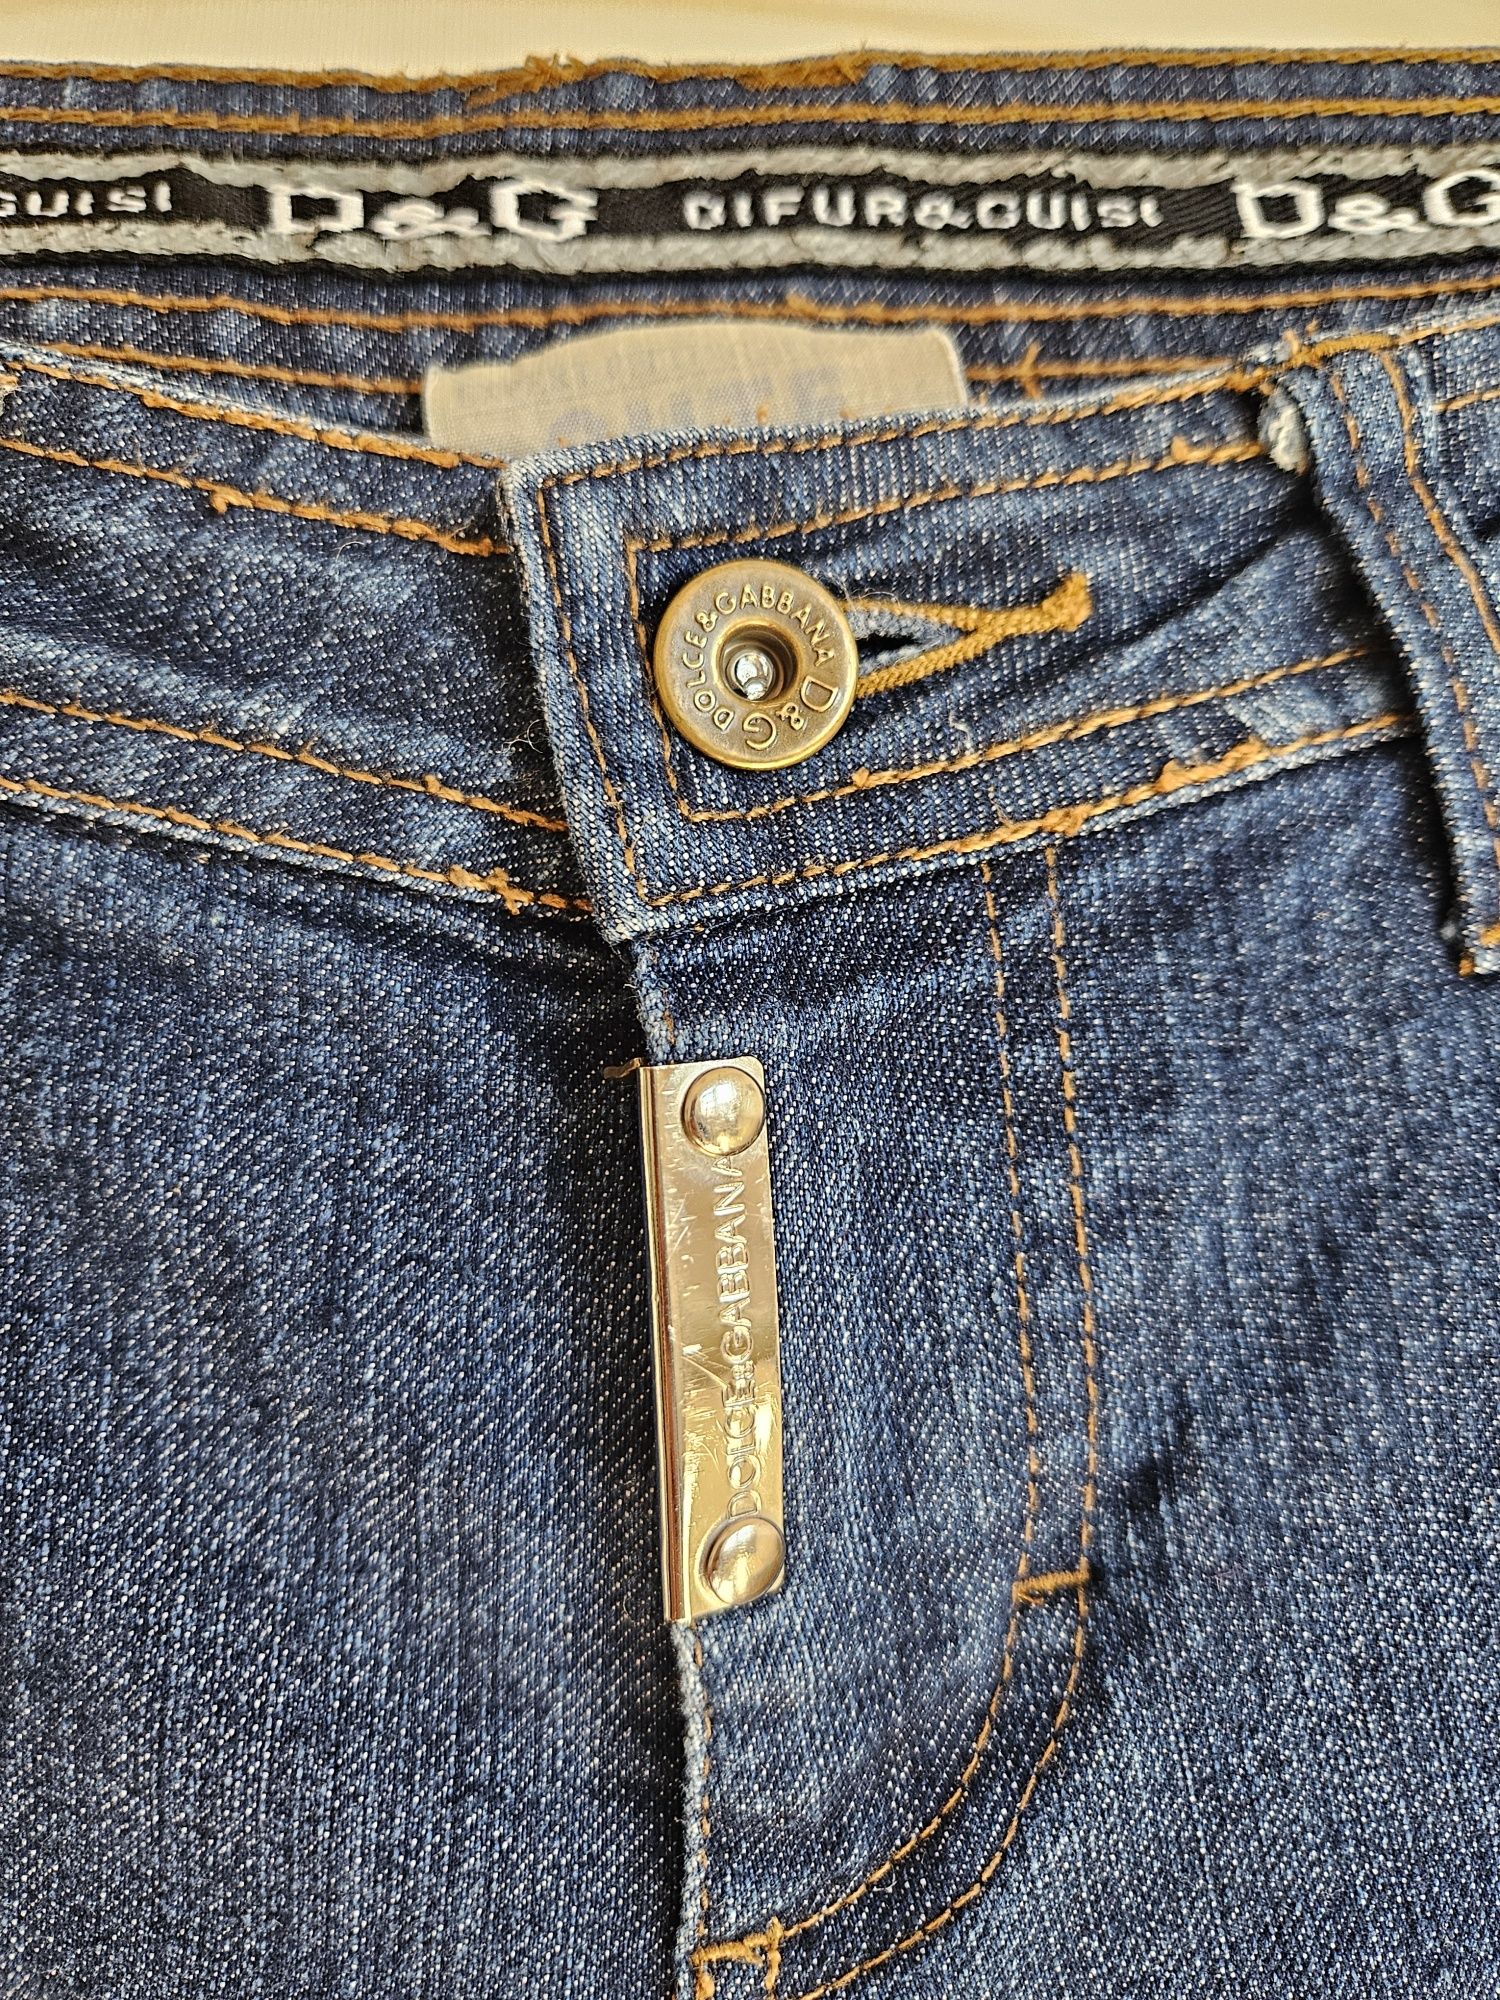 Oldschoolowe jeansy D&G rozmiar S,  vintage, retro look